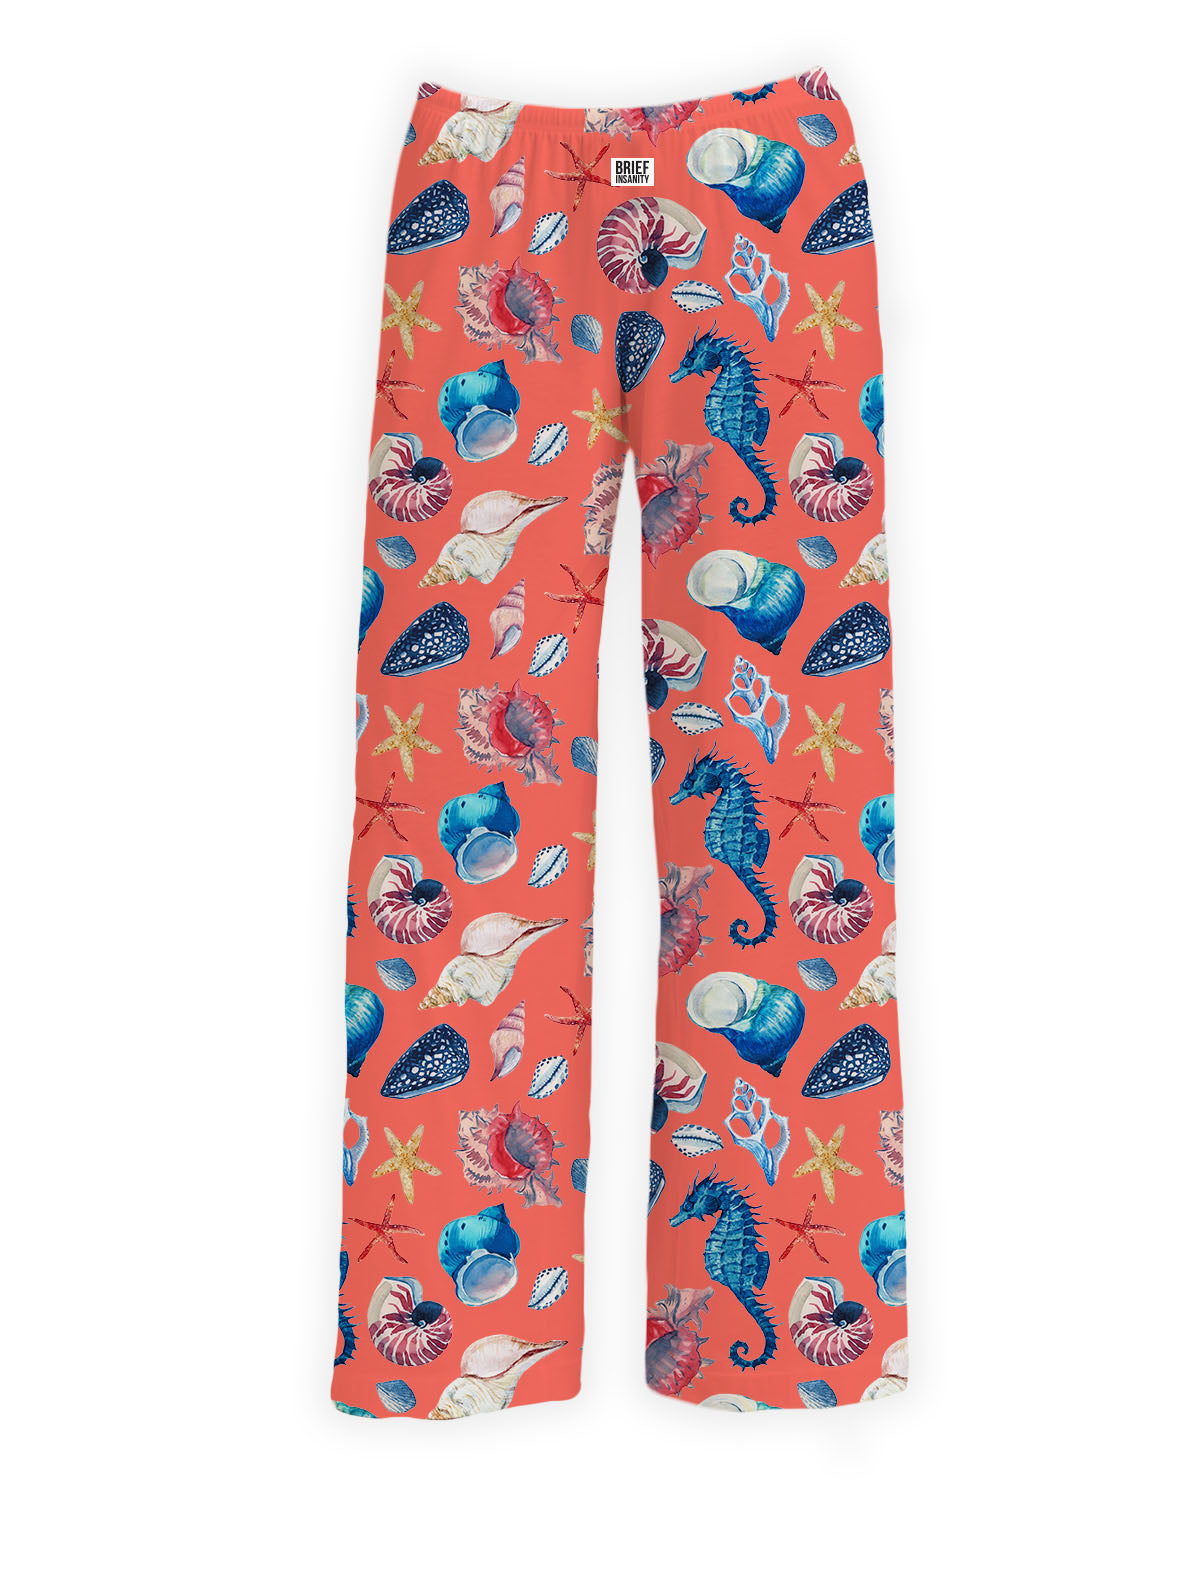 Cookie Monster Enjoy Life Pajama Lounge Pants